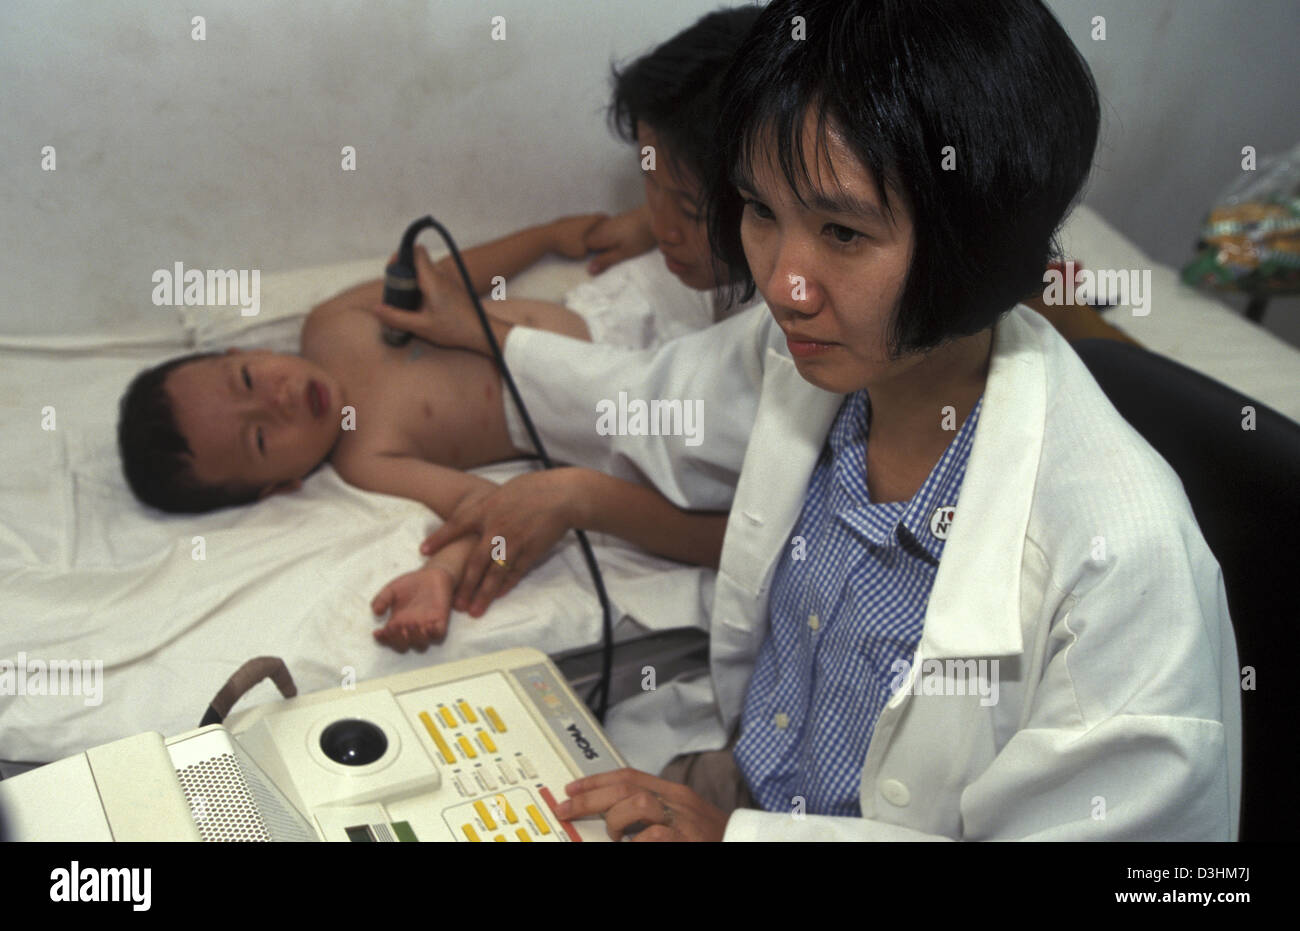 MEDICINE IN VIETNAM Stock Photo